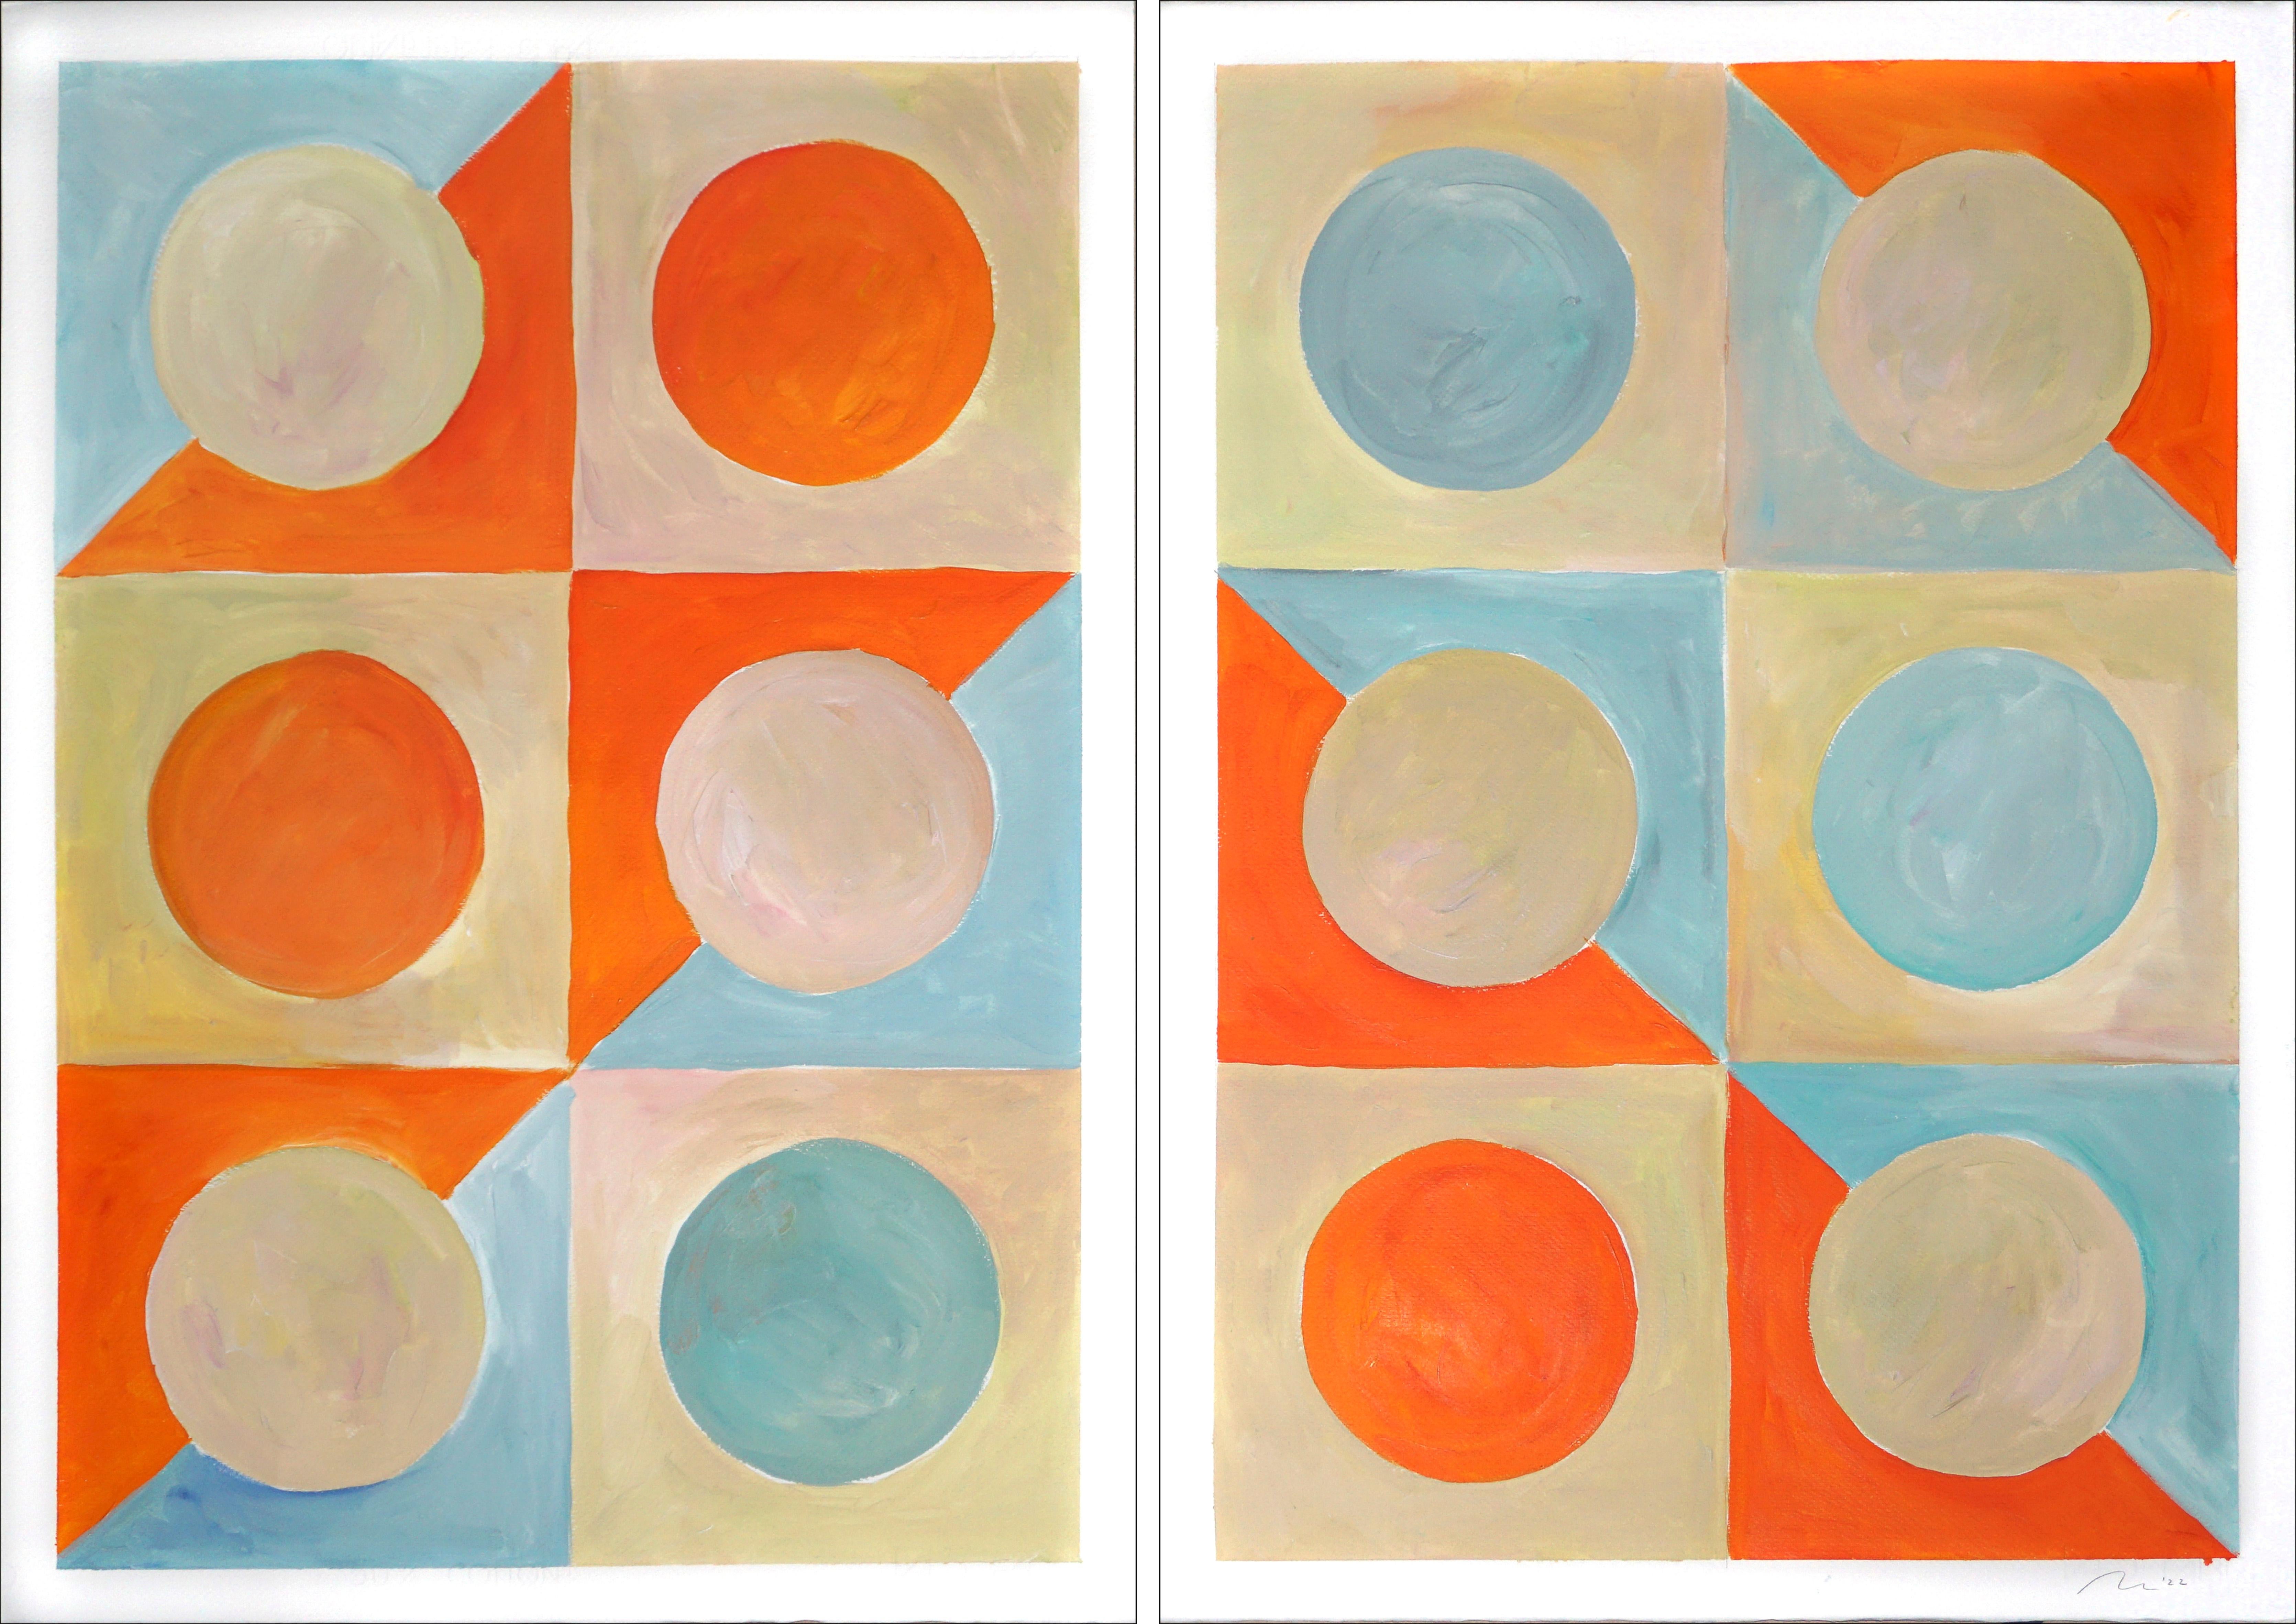 Yin Yang Golden Pattern Tiles, Orange and Turquoise Bauhaus Shapes Diptych, 2022